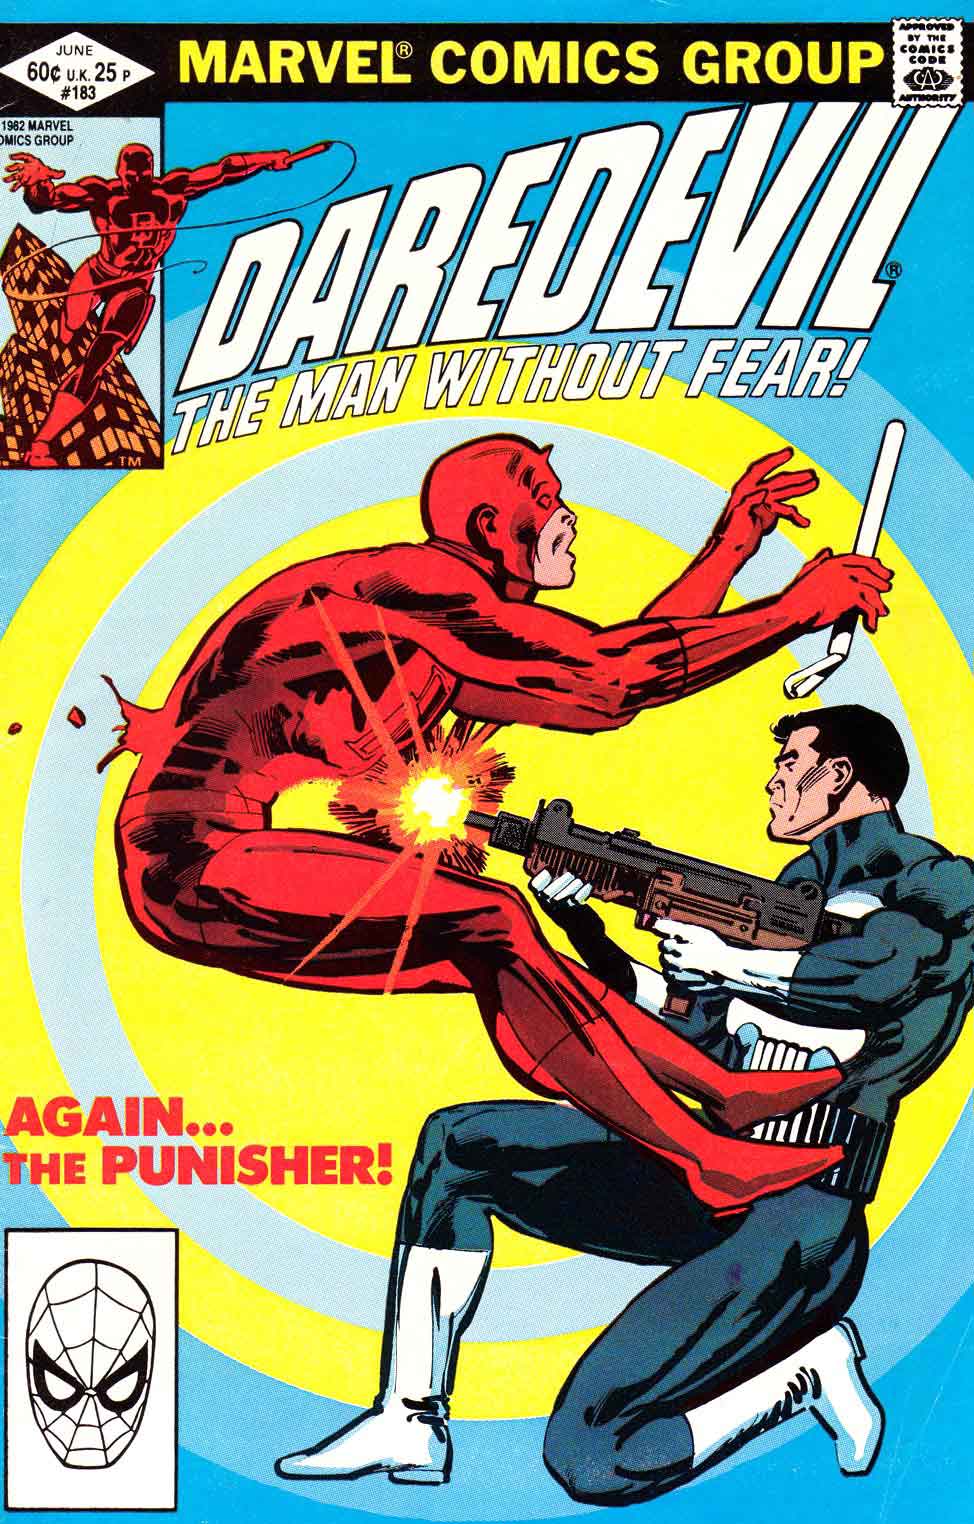 Daredevil v1 #183 punisher marvel comic book cover art by Frank Miller